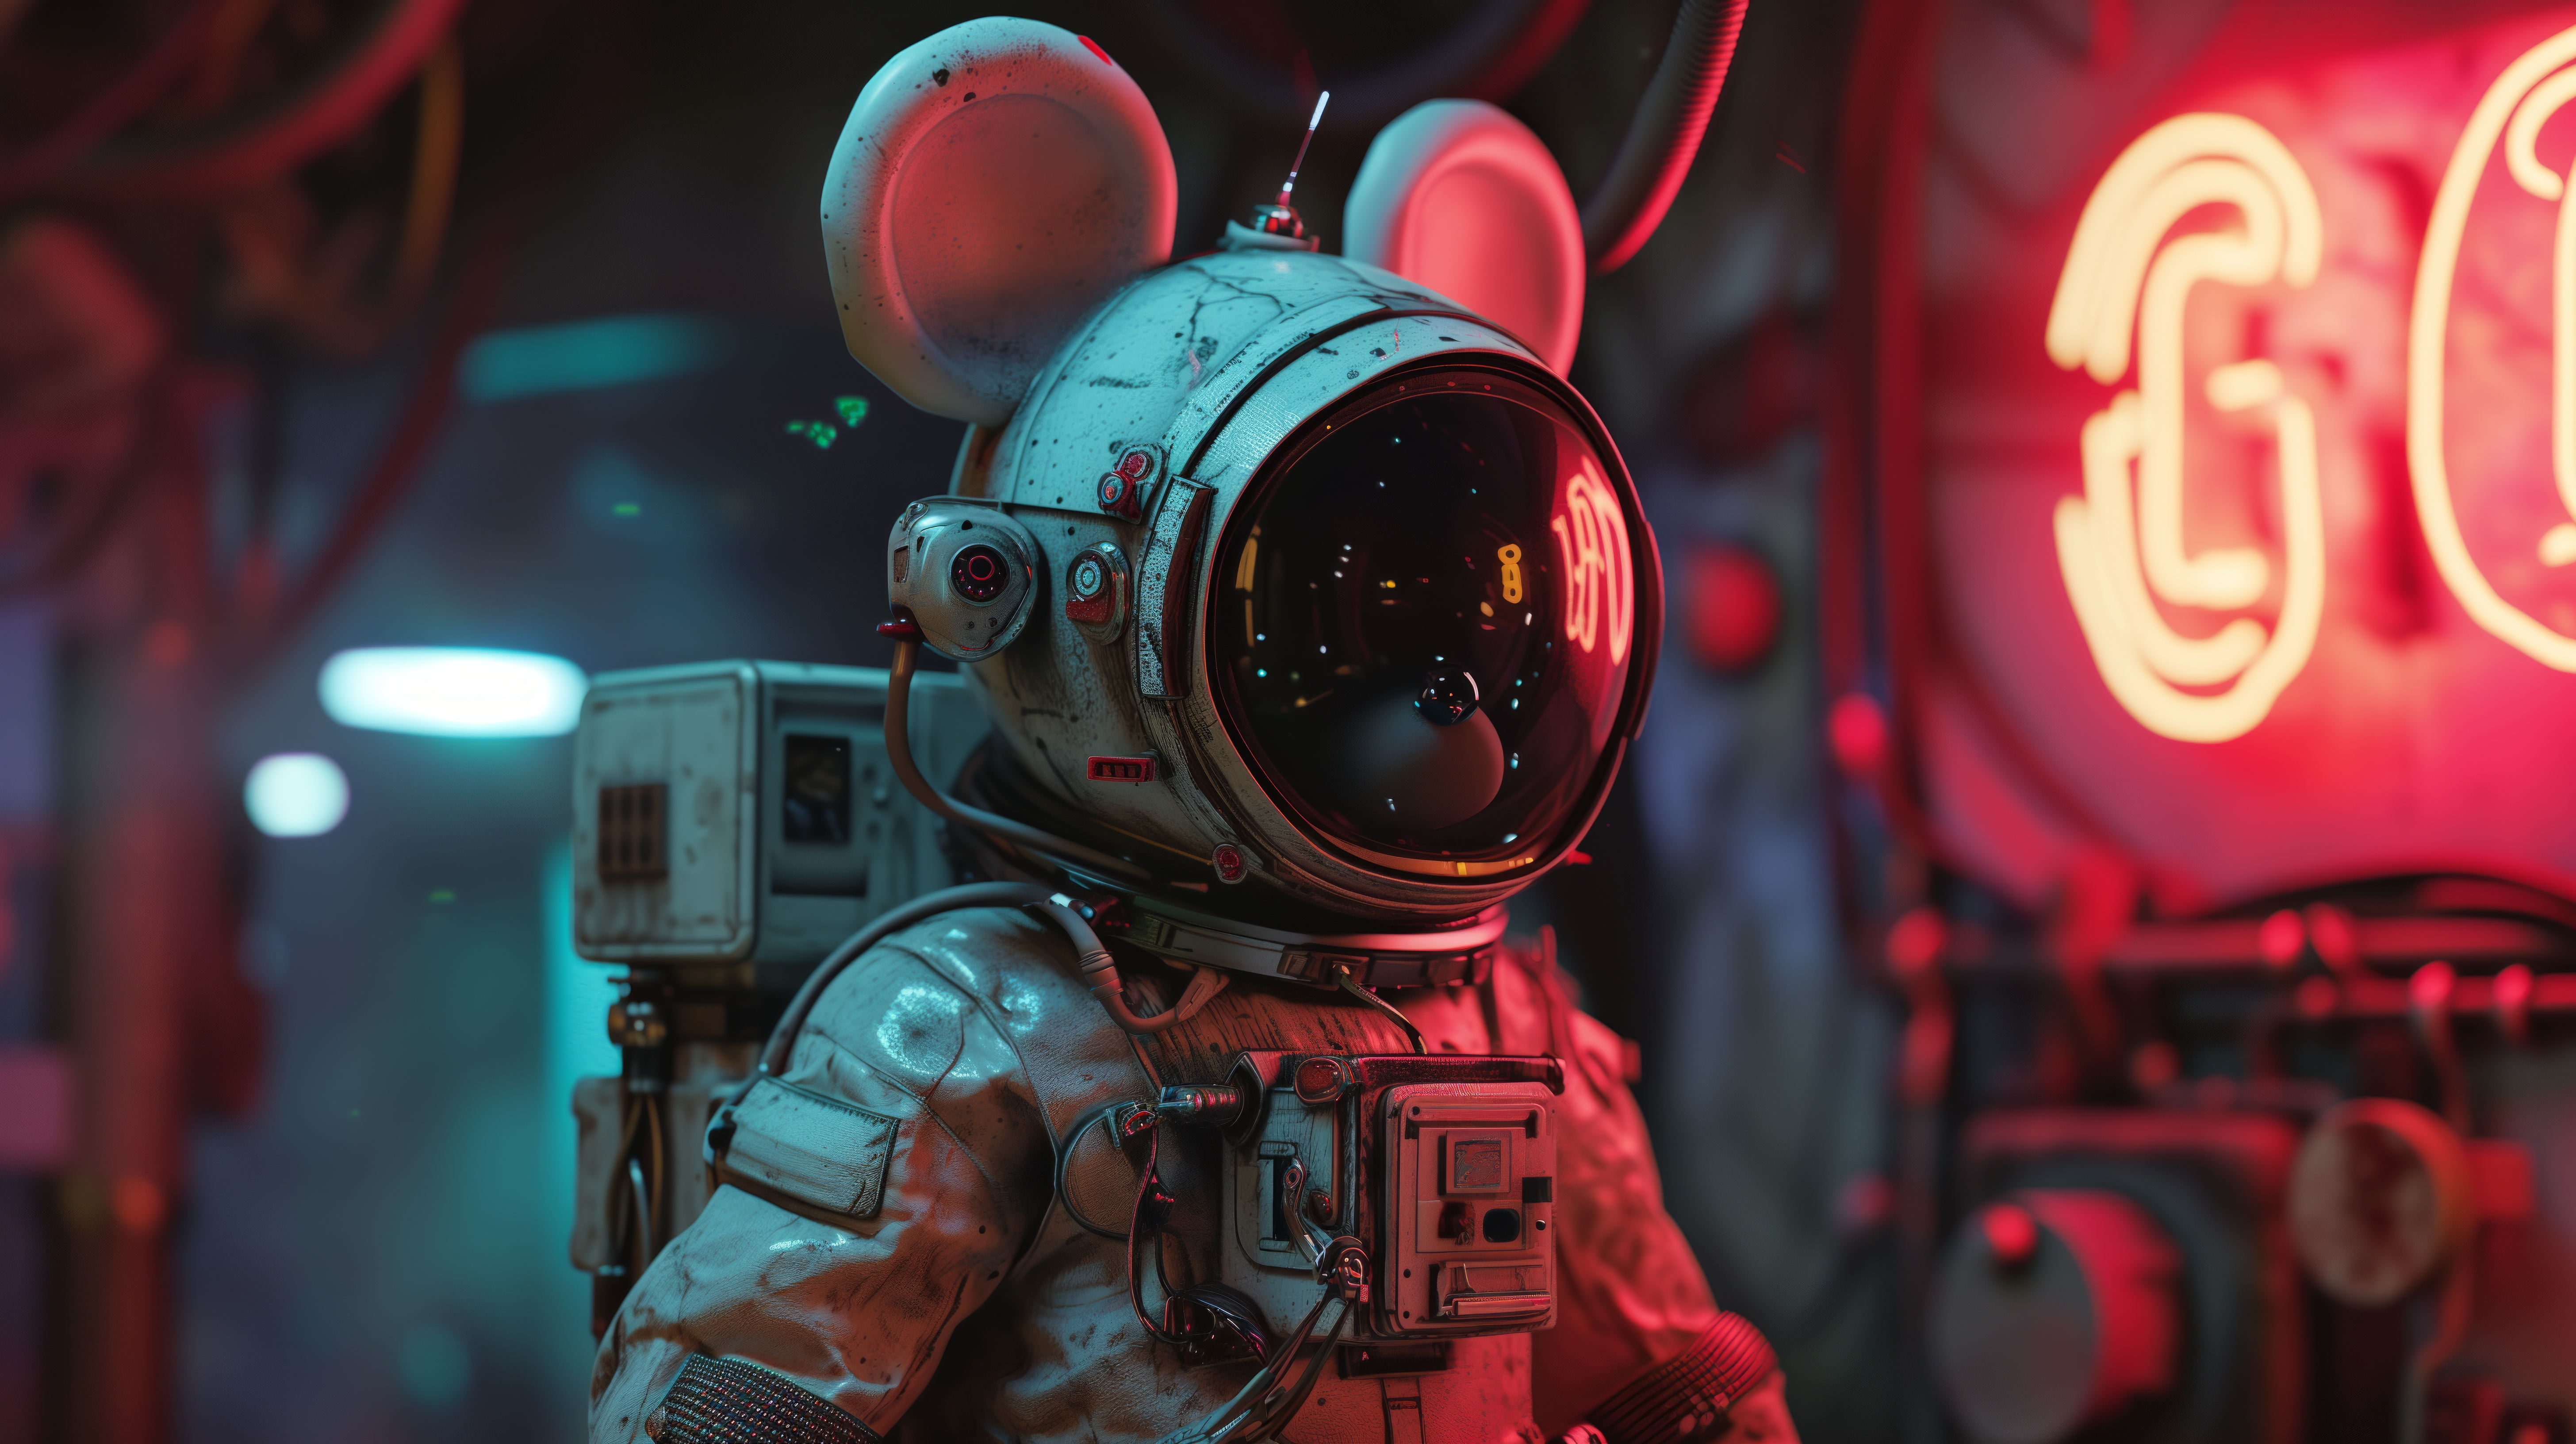 General 5824x3264 AI art cyberpunk depth of field spacesuit astronaut Mickey Mouse neon sign mice digital art mouse ears